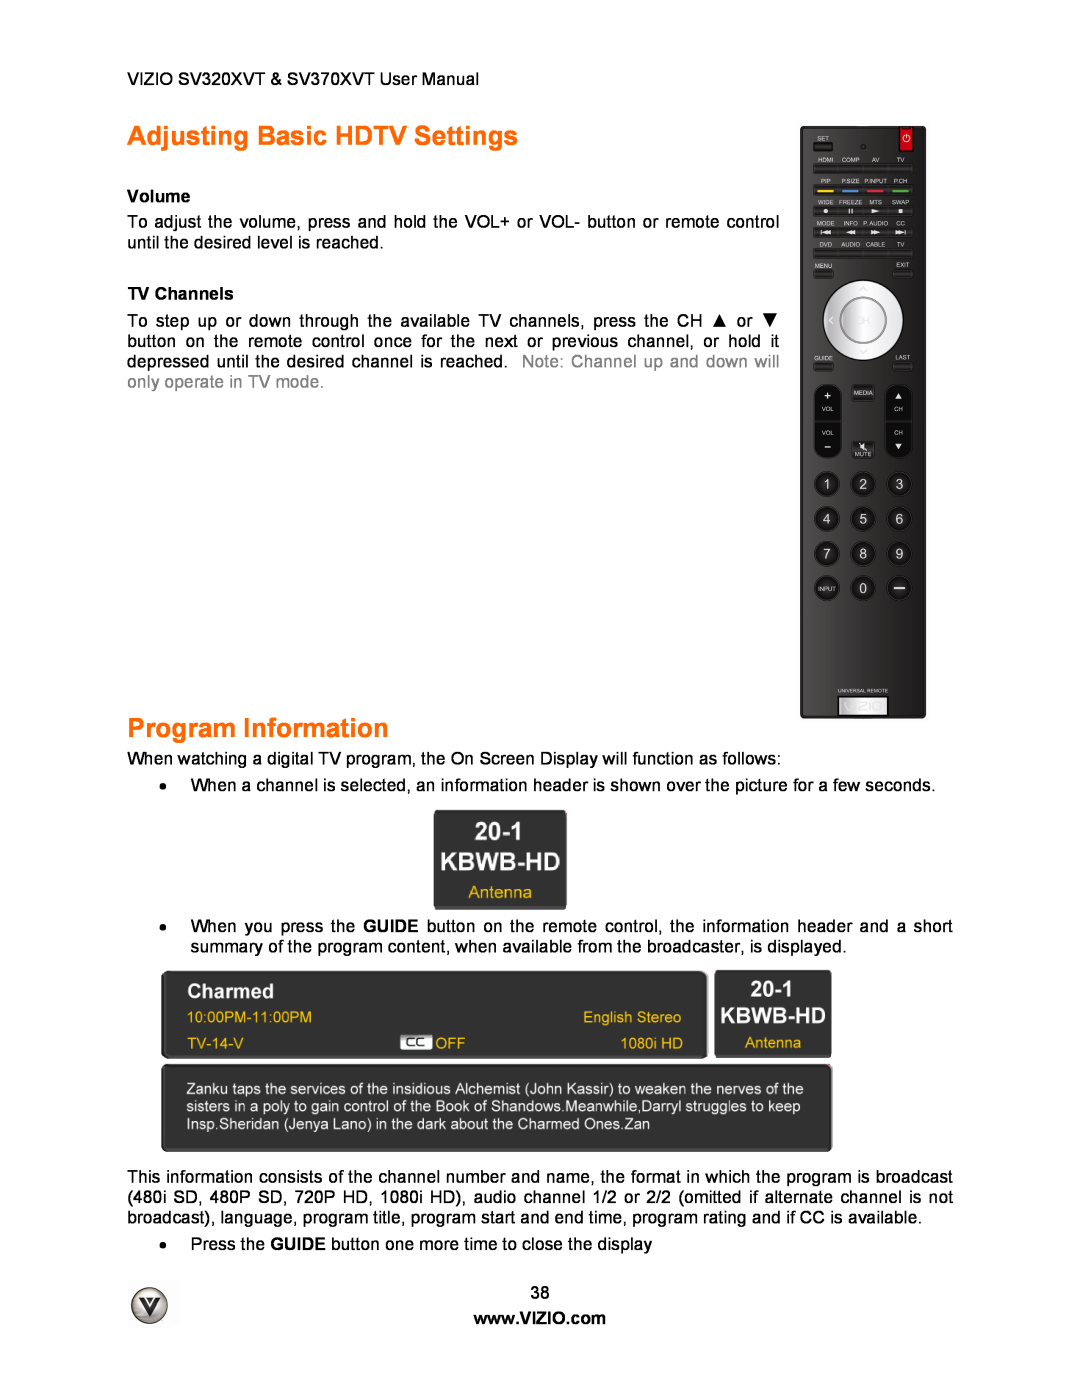 Vizio SV320XVT, SV370XVT user manual Adjusting Basic HDTV Settings, Program Information, Volume, TV Channels 